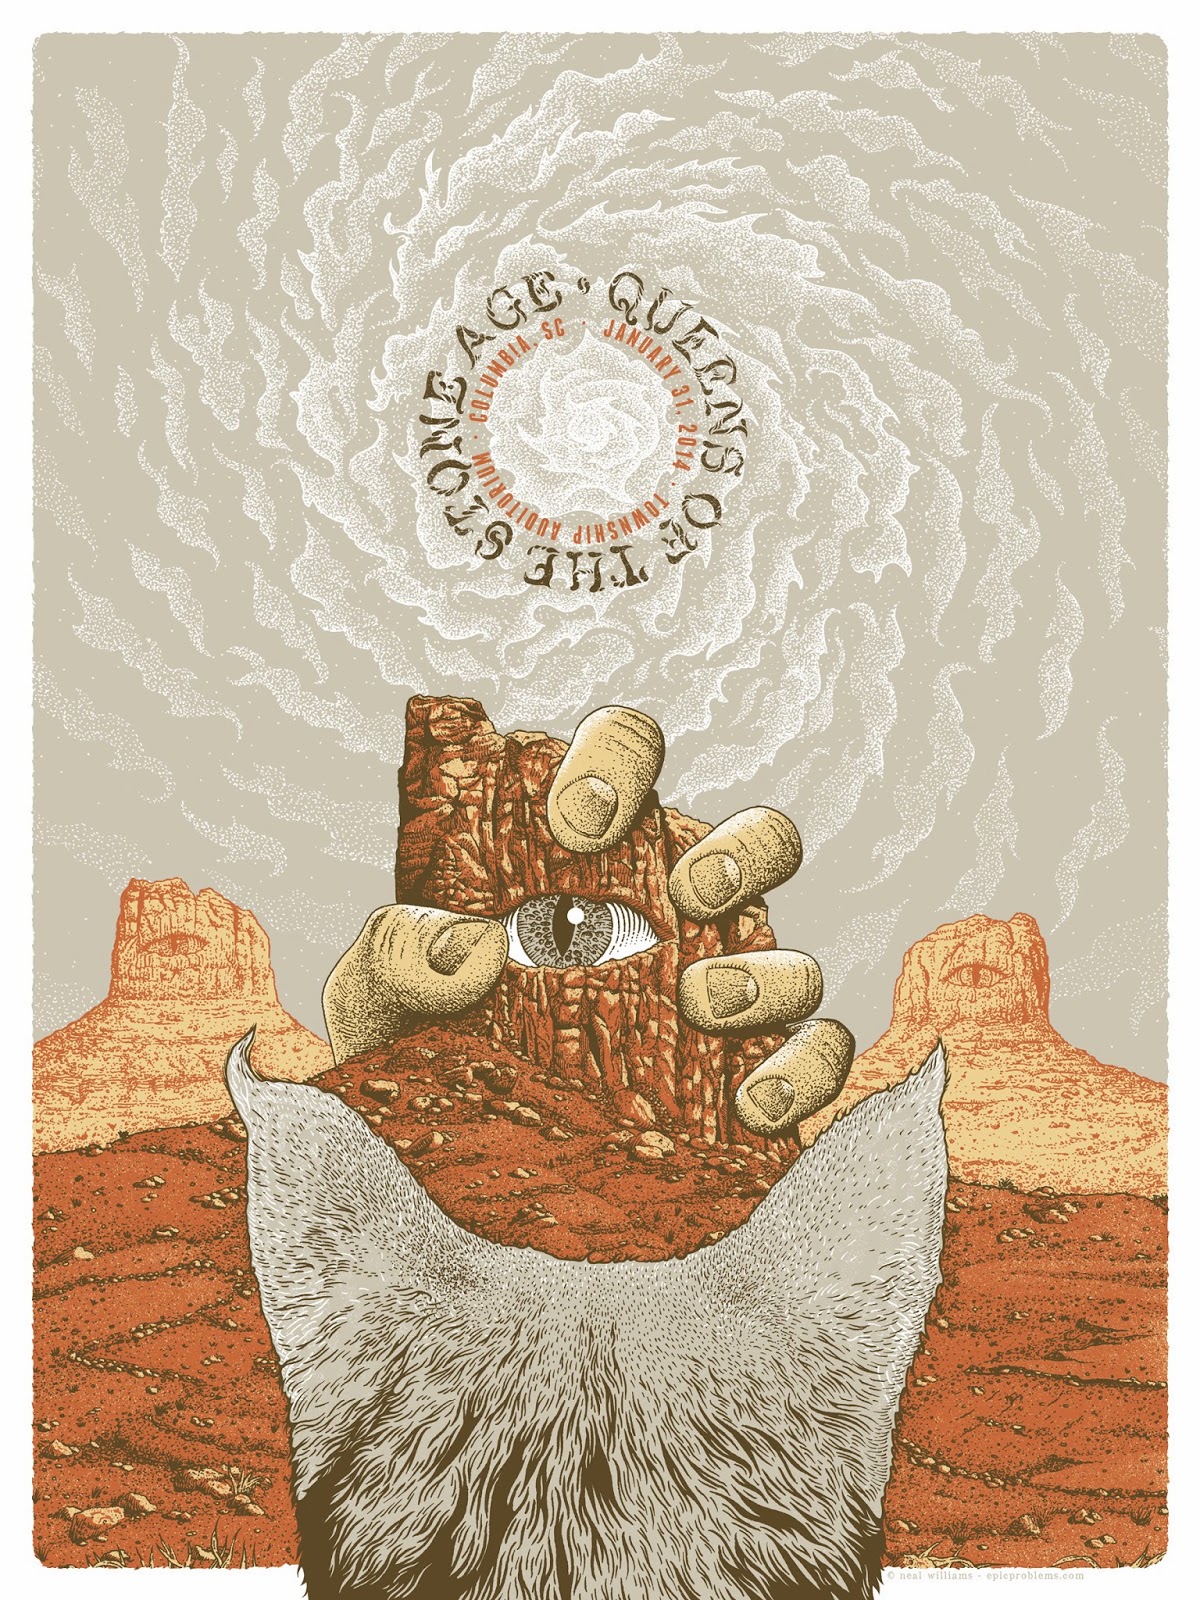 INSIDE THE ROCK POSTER FRAME BLOG: Queens of the Stone Age Neal ... Queens Of The Stone Age Poster 2014